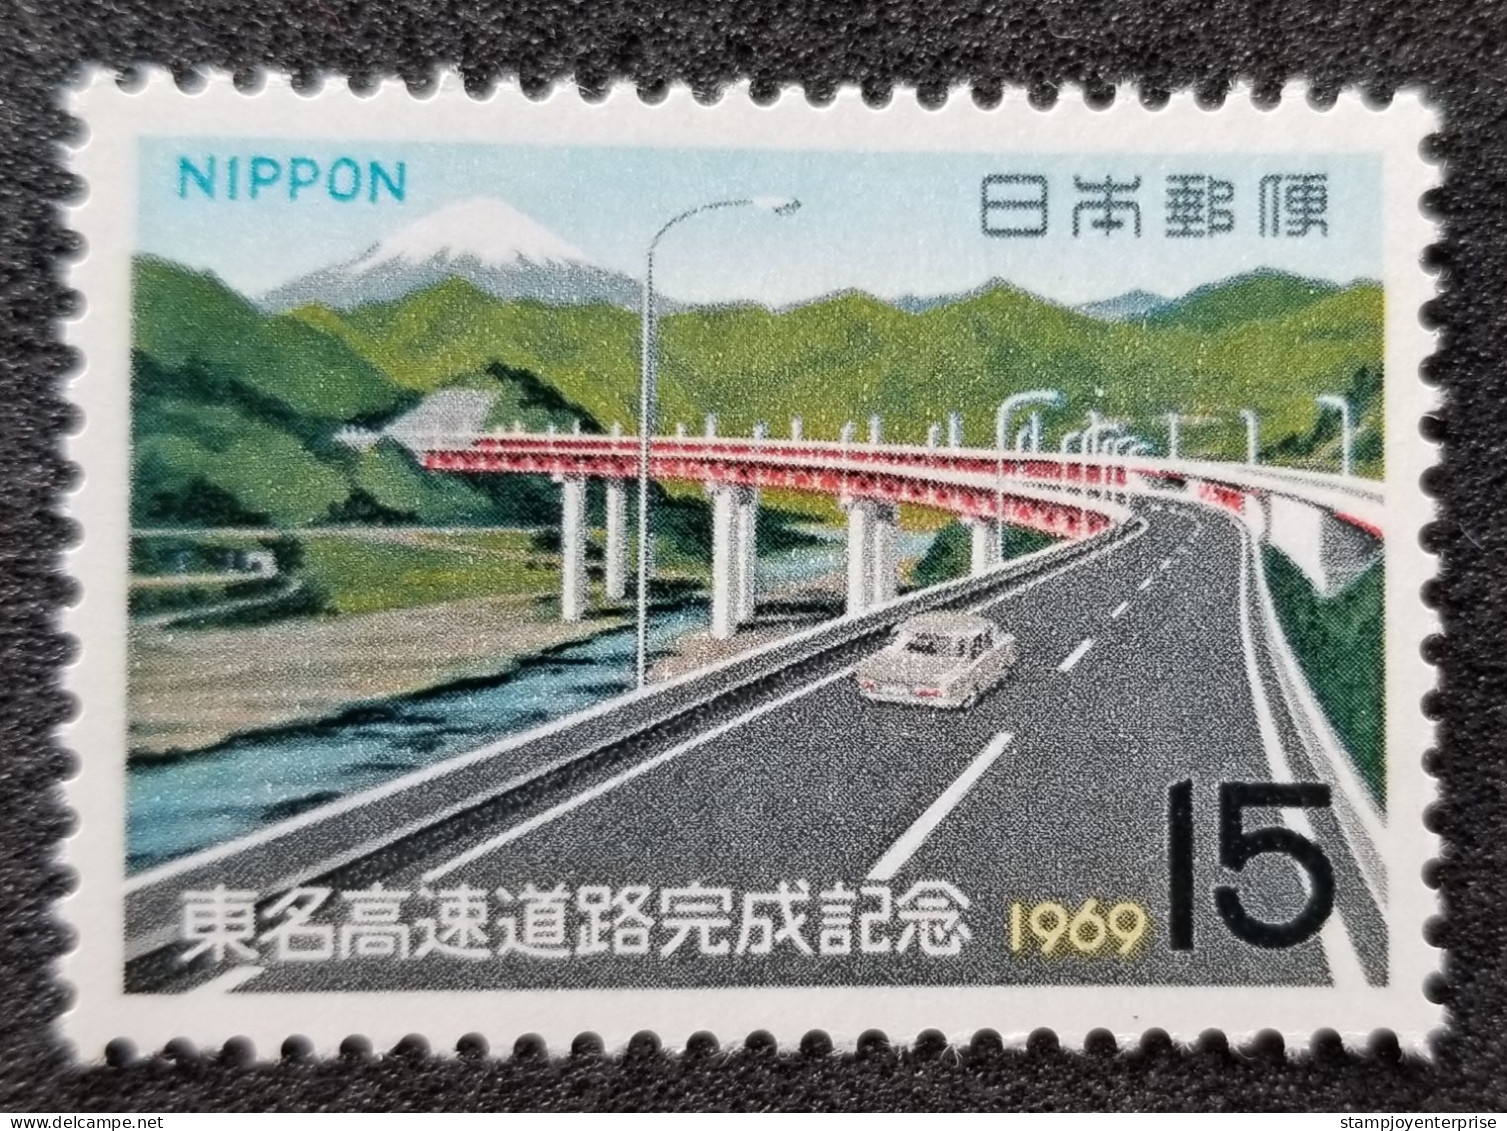 Japan Completion Of Tokyo Nagoya Expressway 1969 Road Car Highway (stamp) MNH - Nuevos